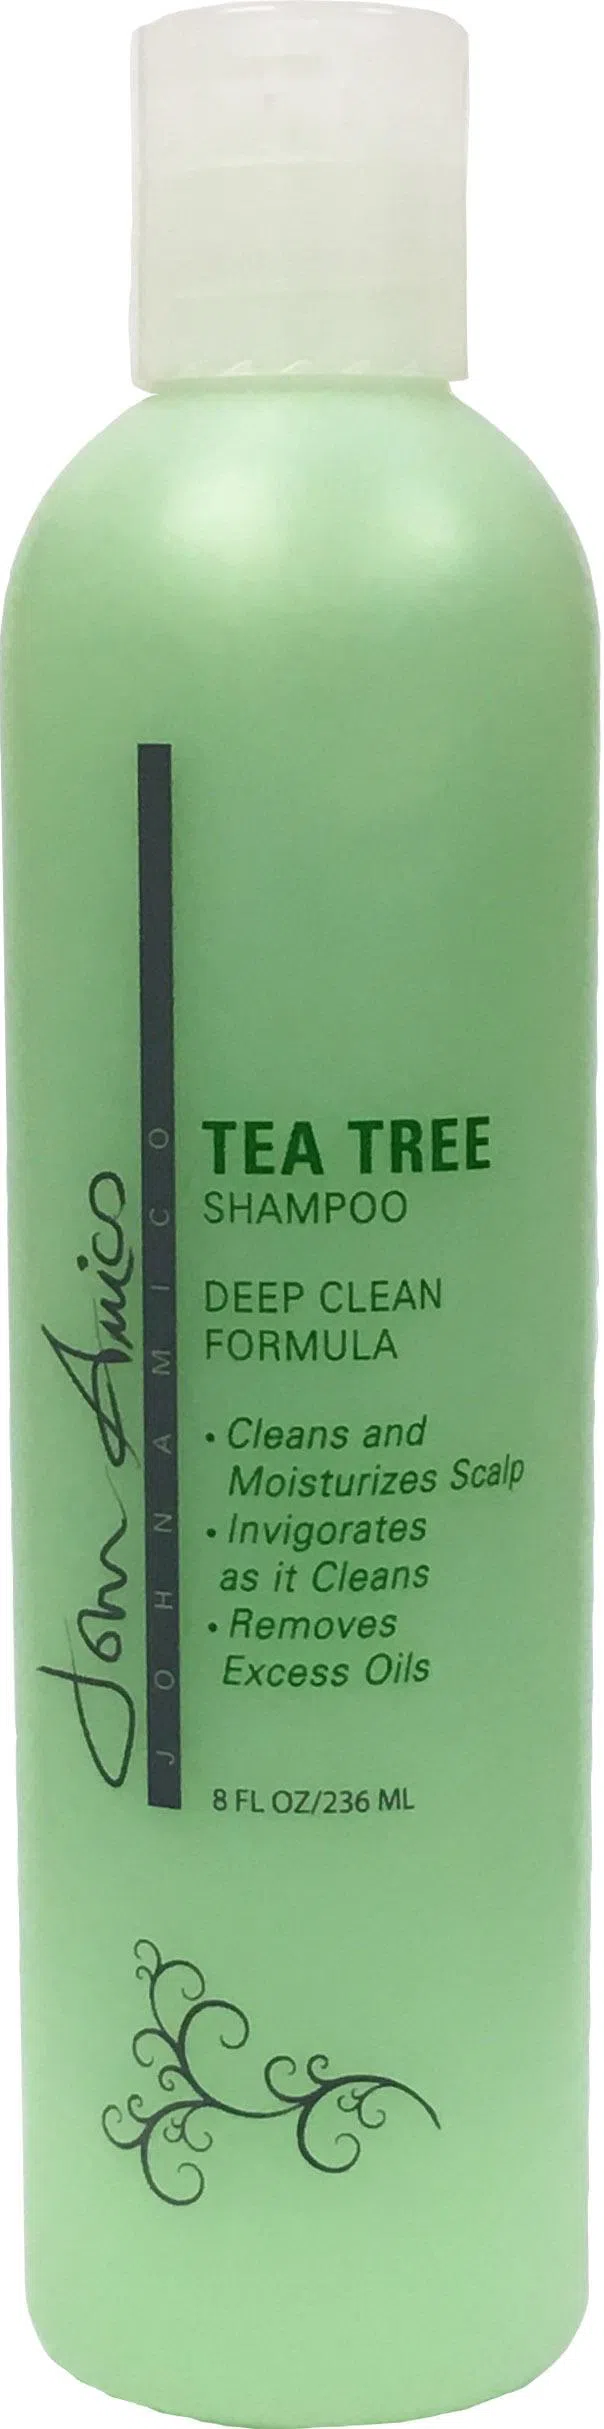 TREE DEEP CLEAN SHAMPOO | Professional Salon Grade - John Amico